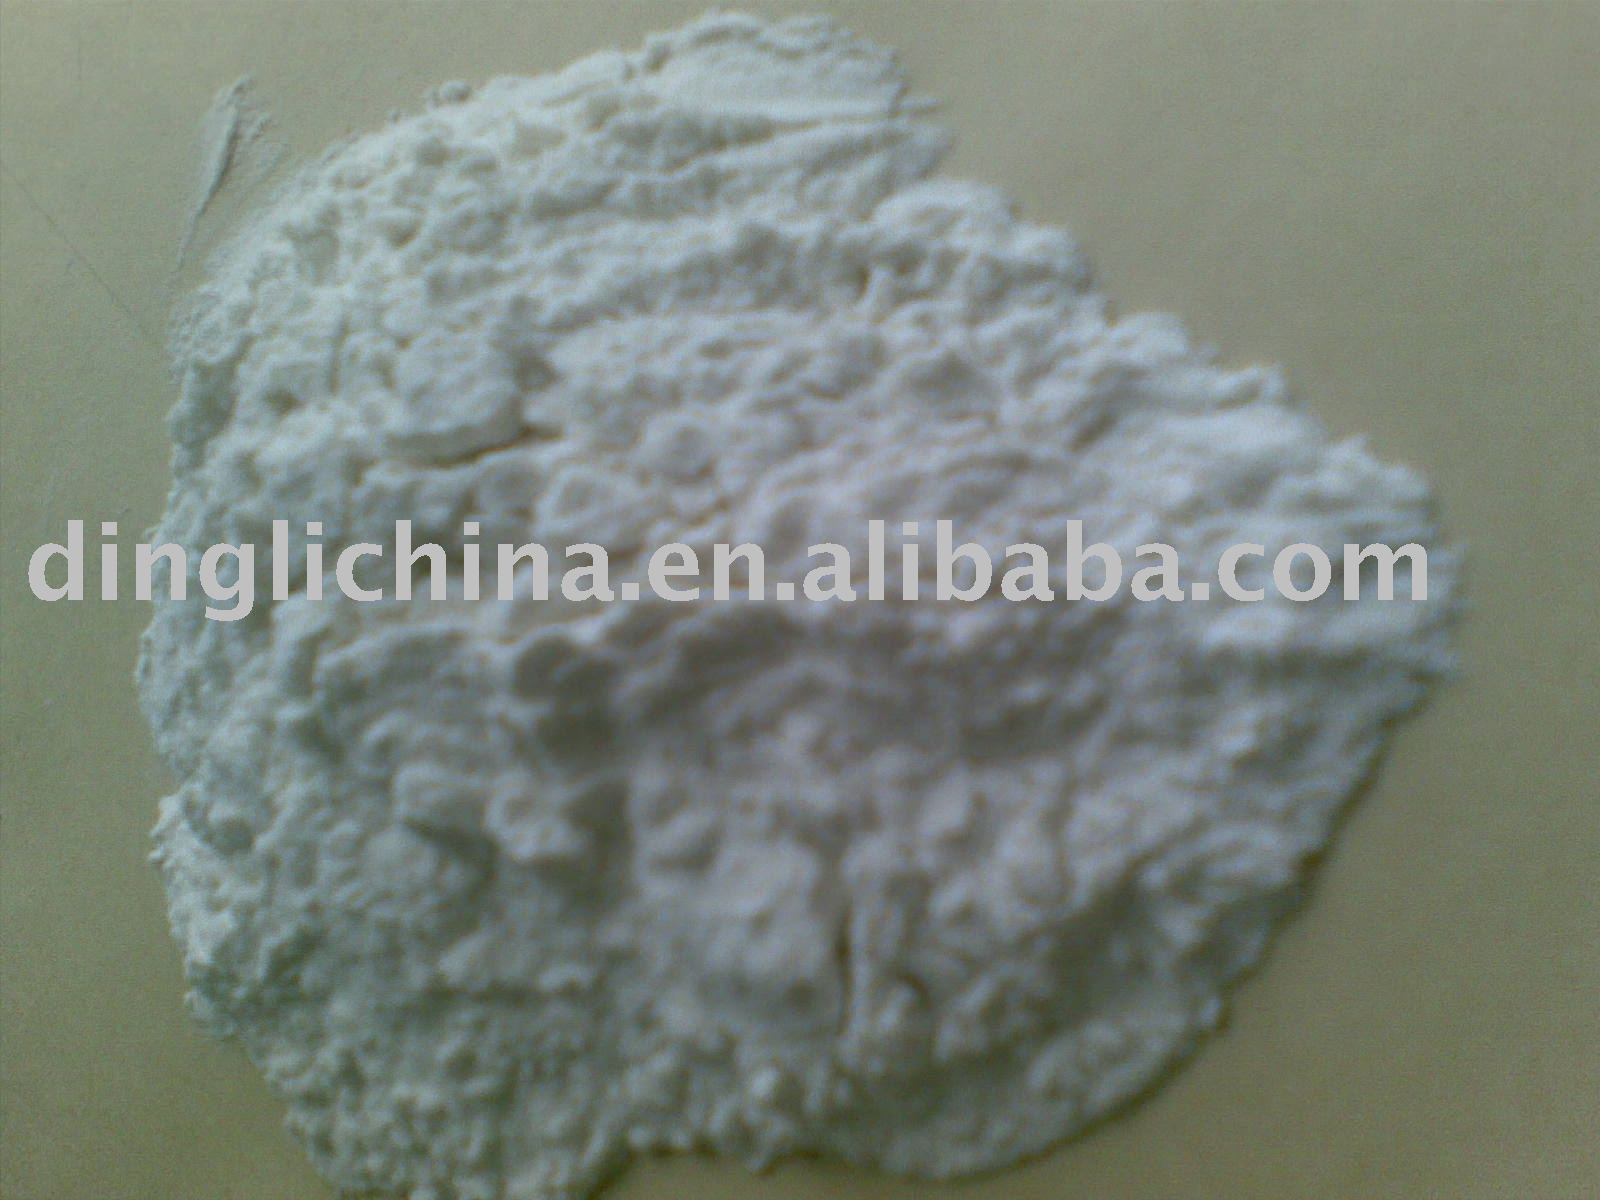 gum acacia,spray dried powder